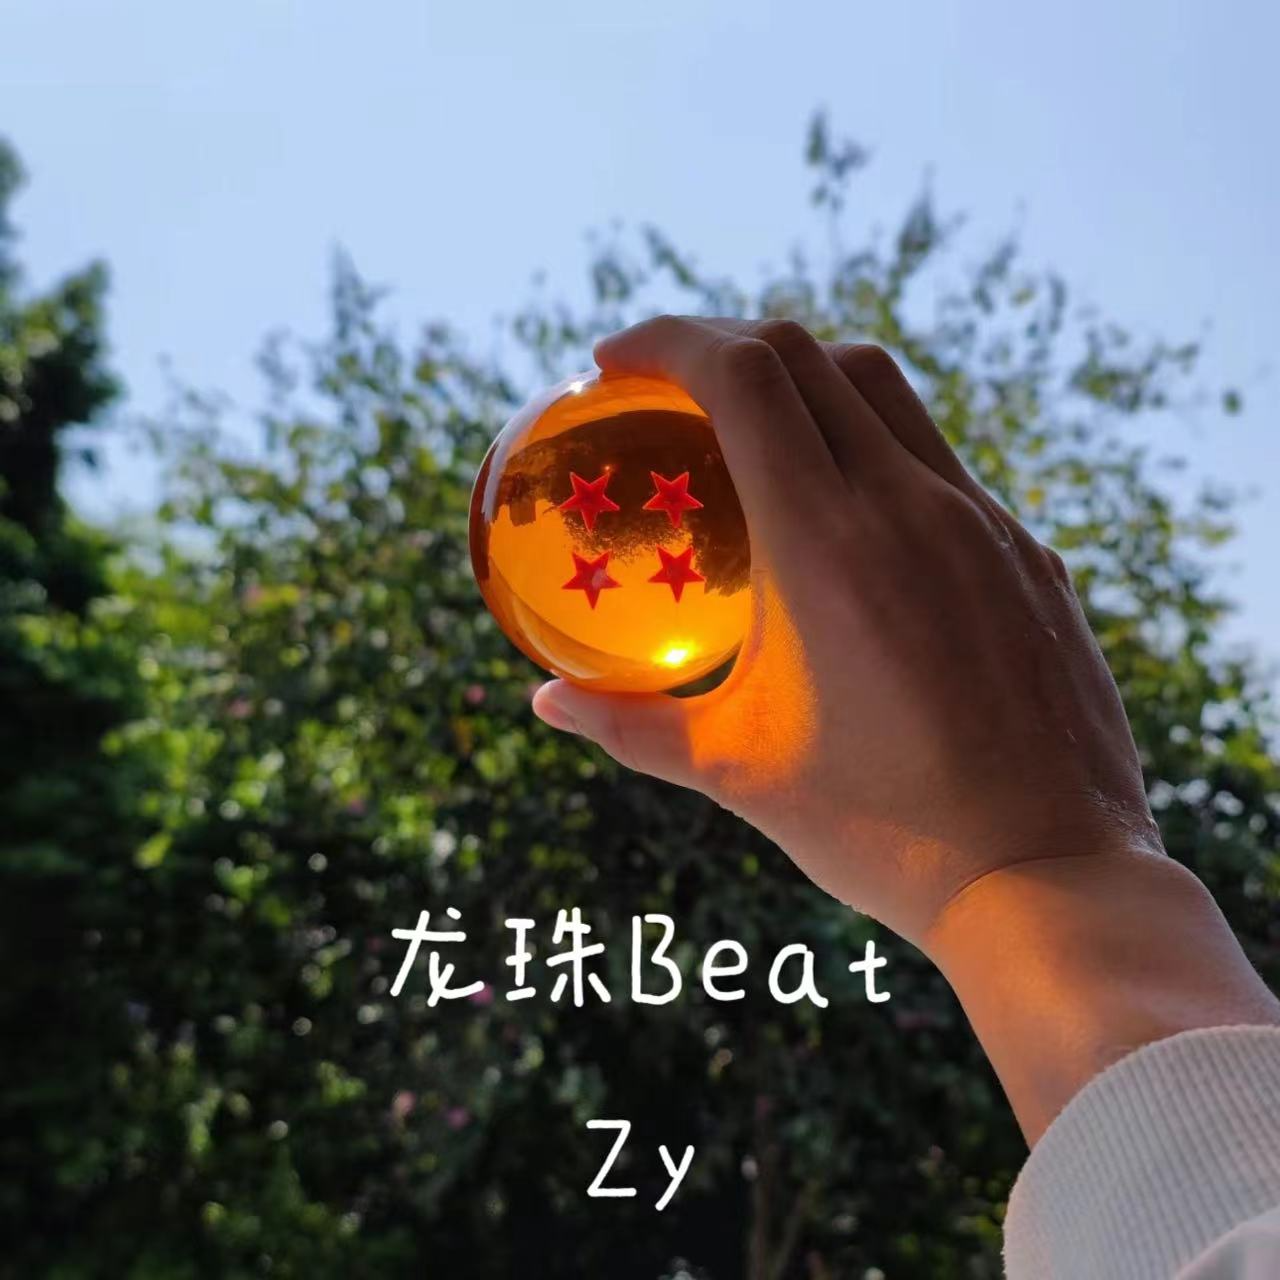 Zy - 龙珠